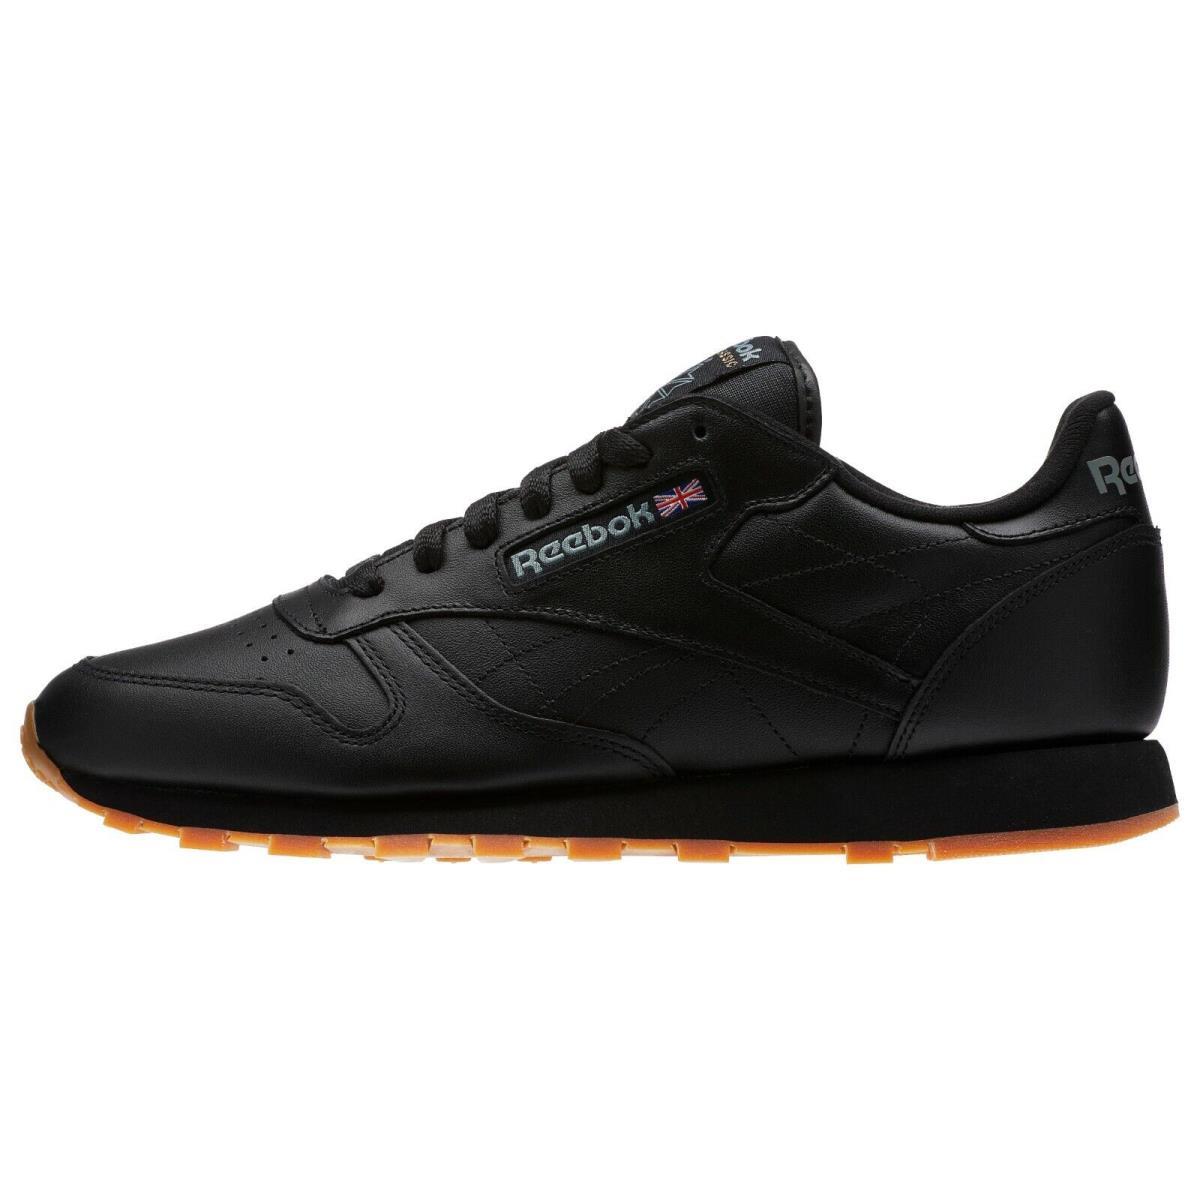 Reebok Adult Unisex Classic Leather Running Shoe Black / Gum 49798 / GY0954